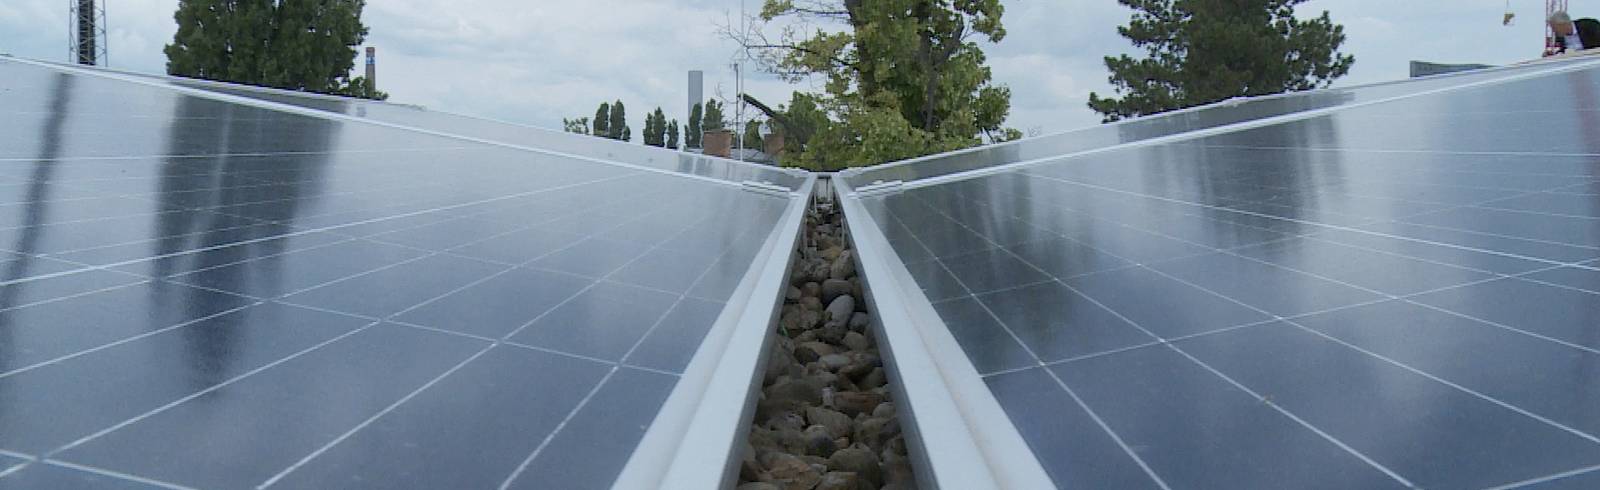 Solarenergie: Dächer sollen genutzt werden